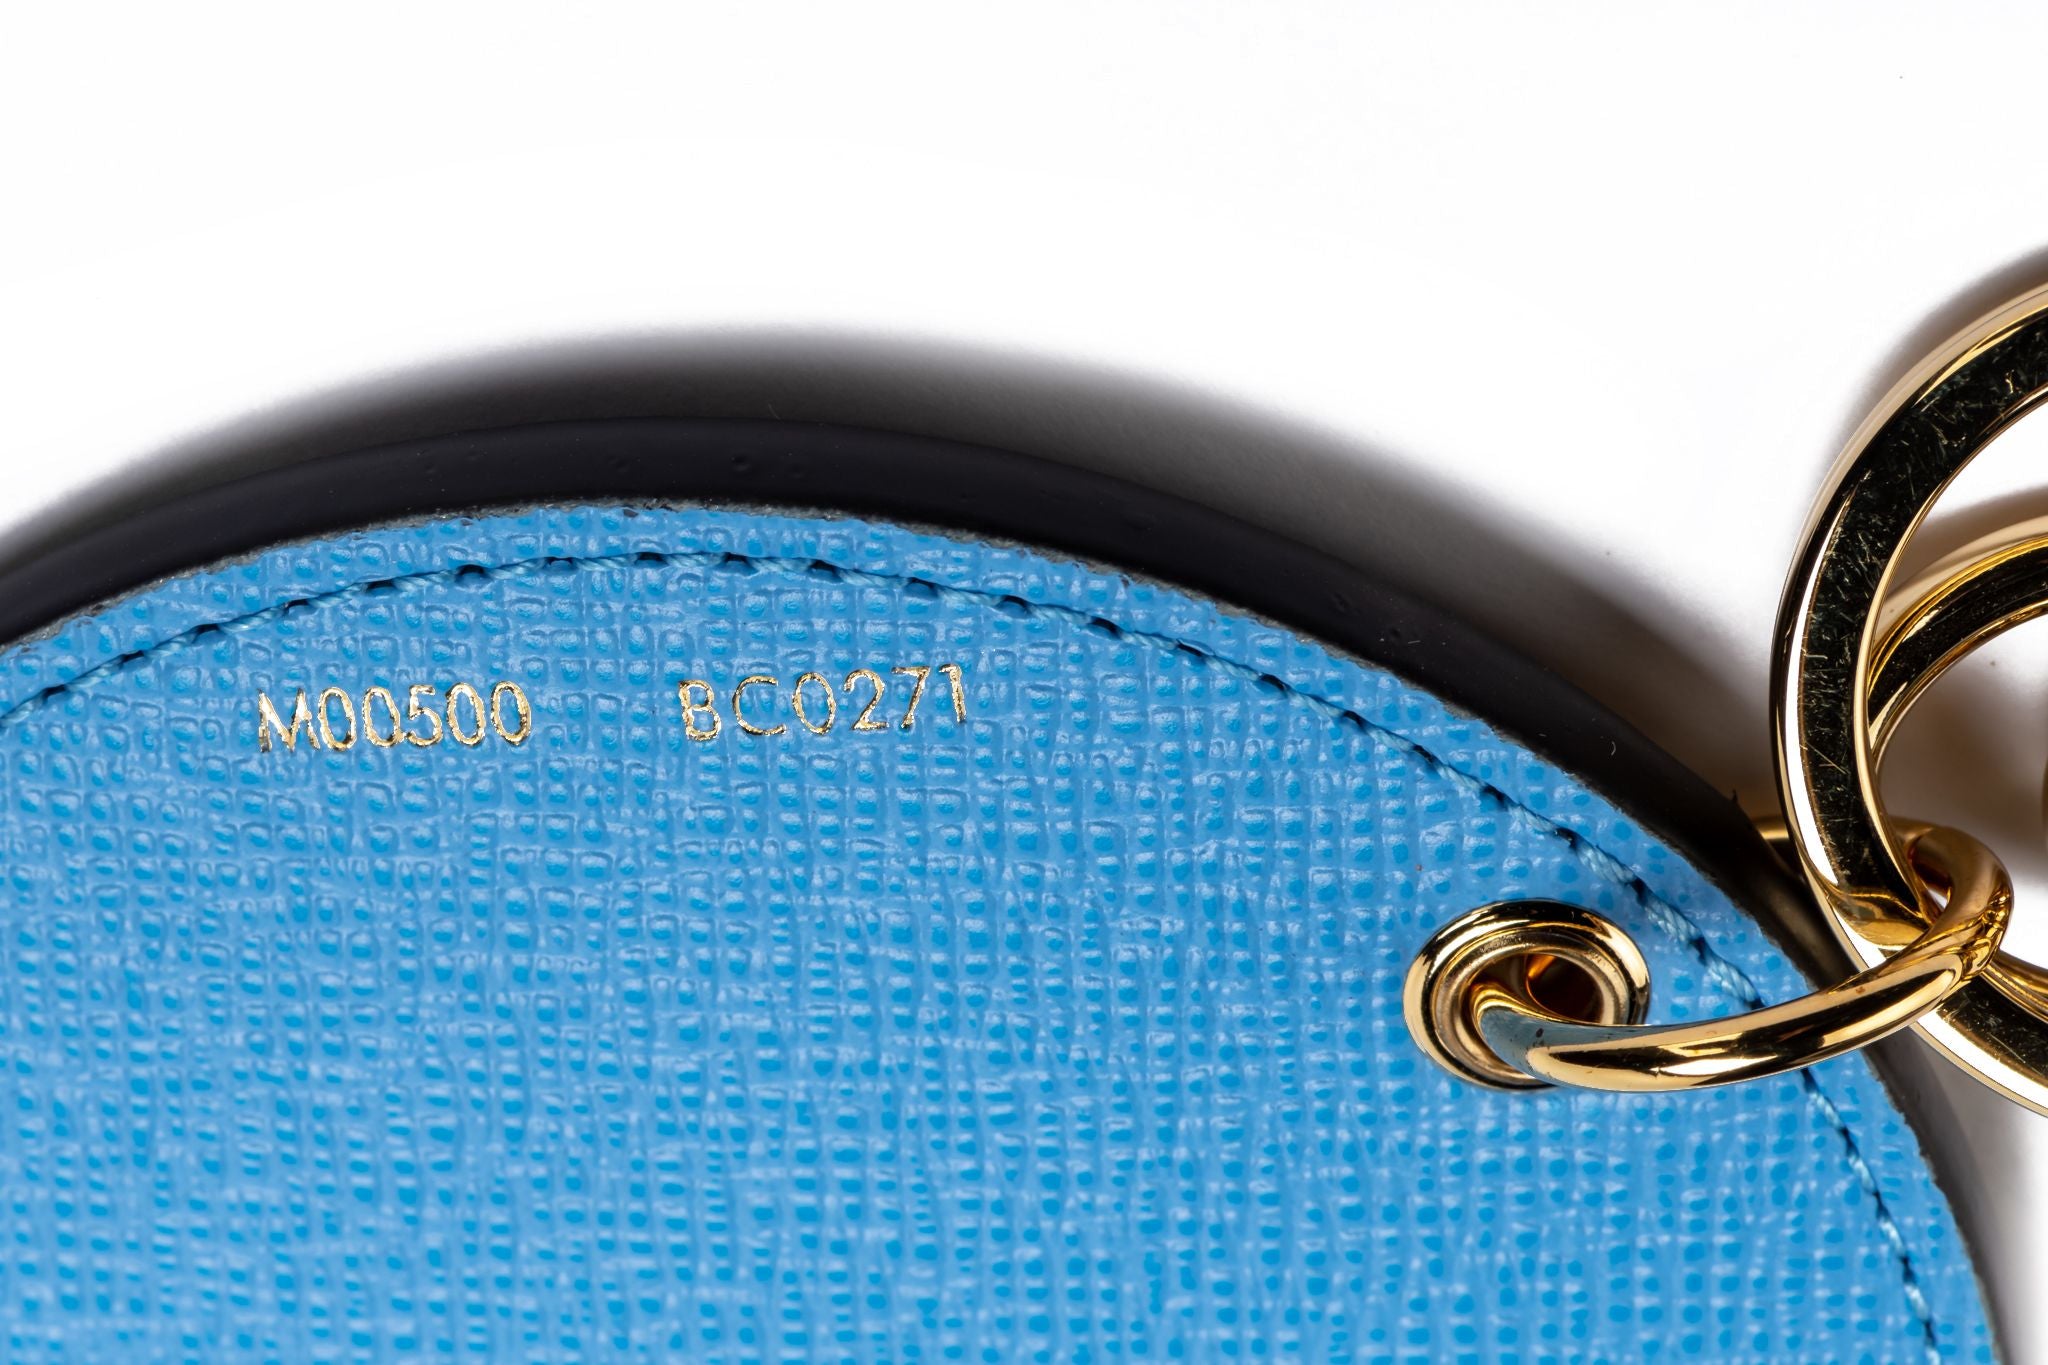 Louis Vuitton Jungle Vivienne Bag Charm - Brown Keychains